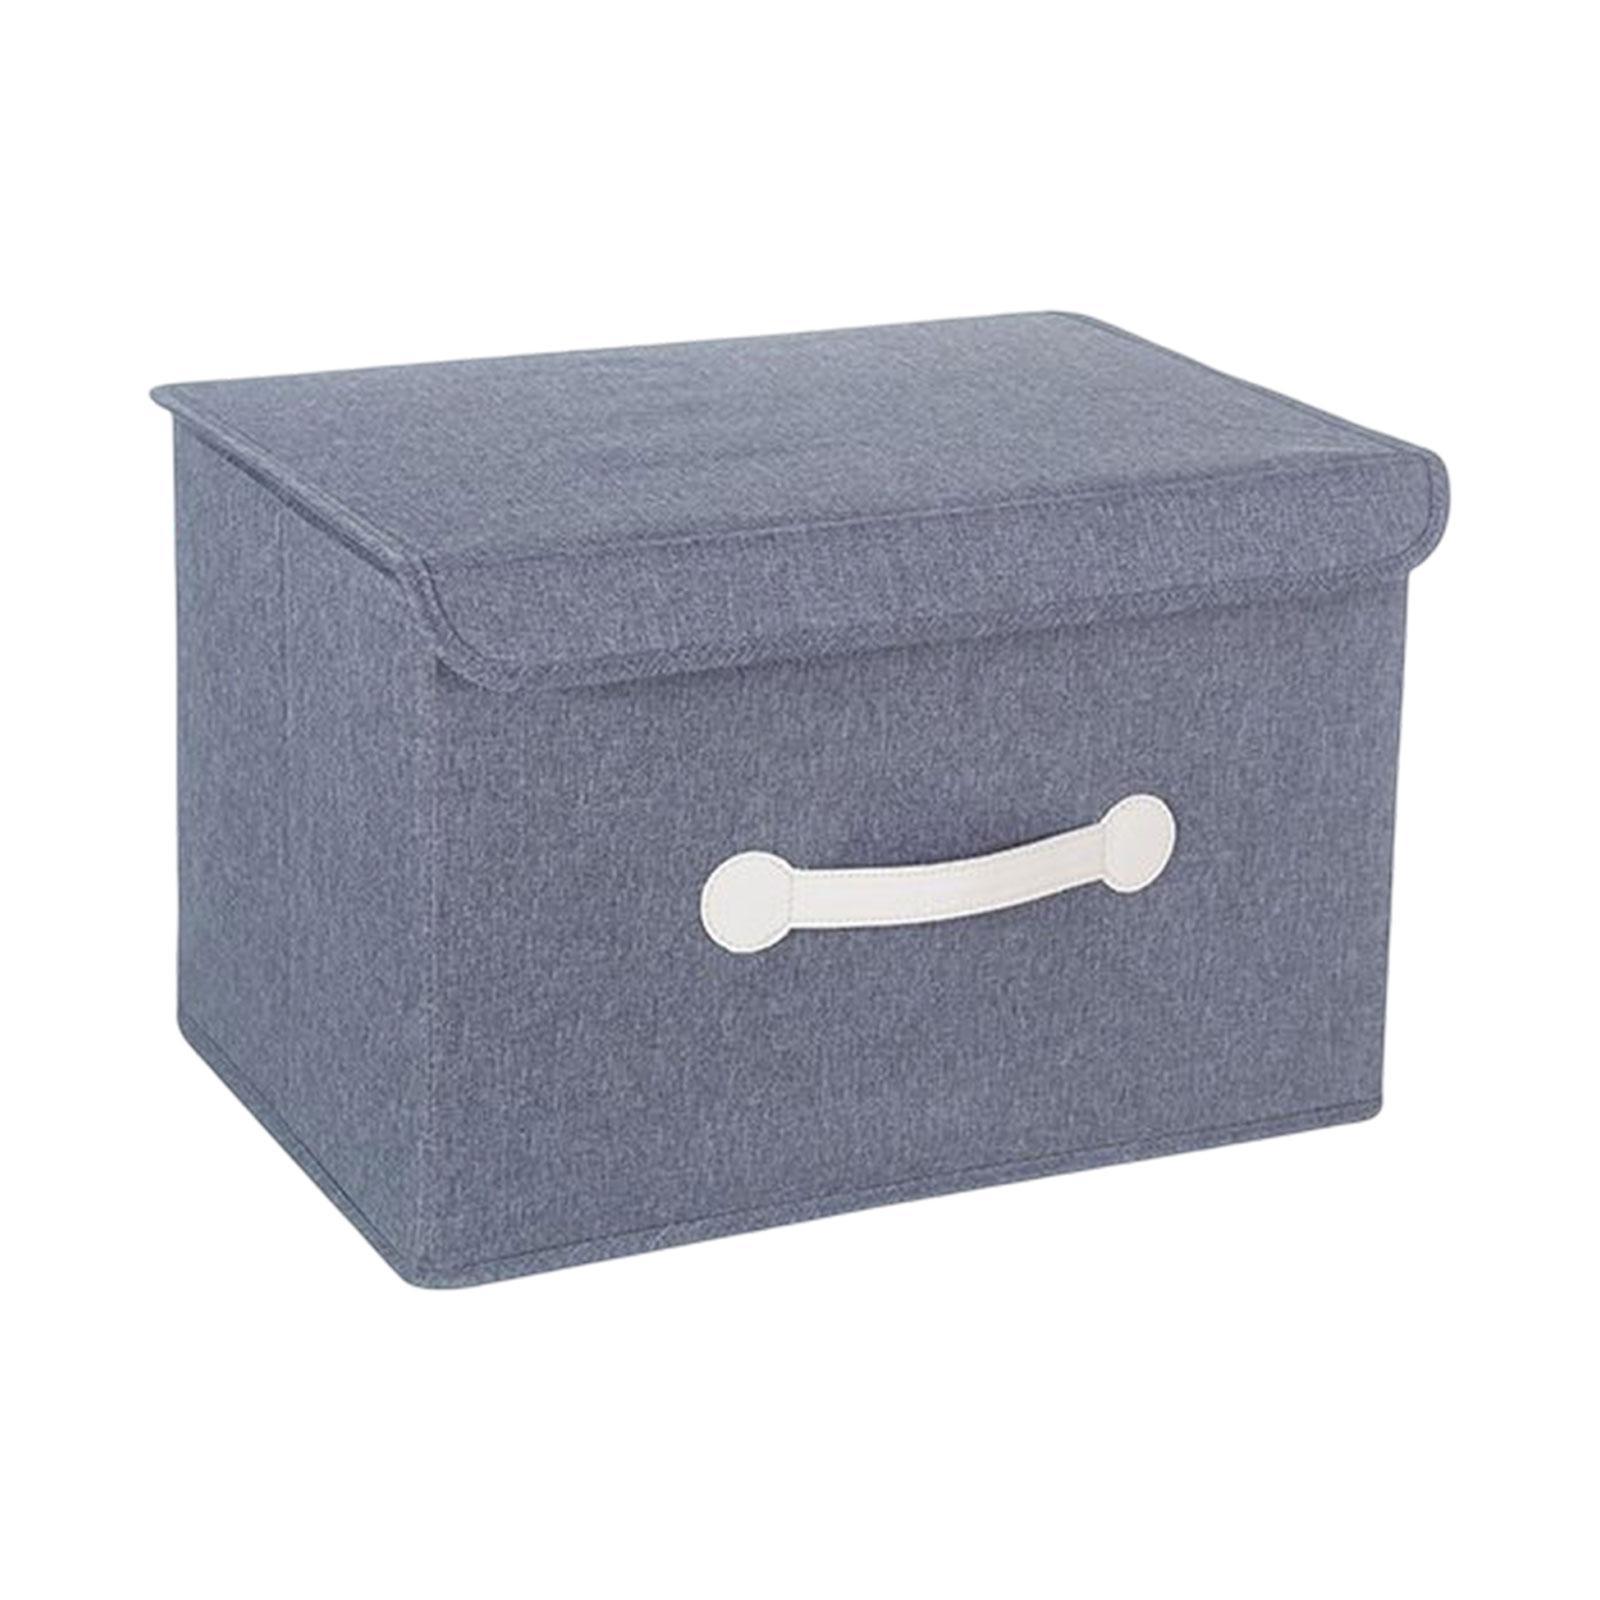 Box Closet Organizers and Storage Baskets gray 26.5cm